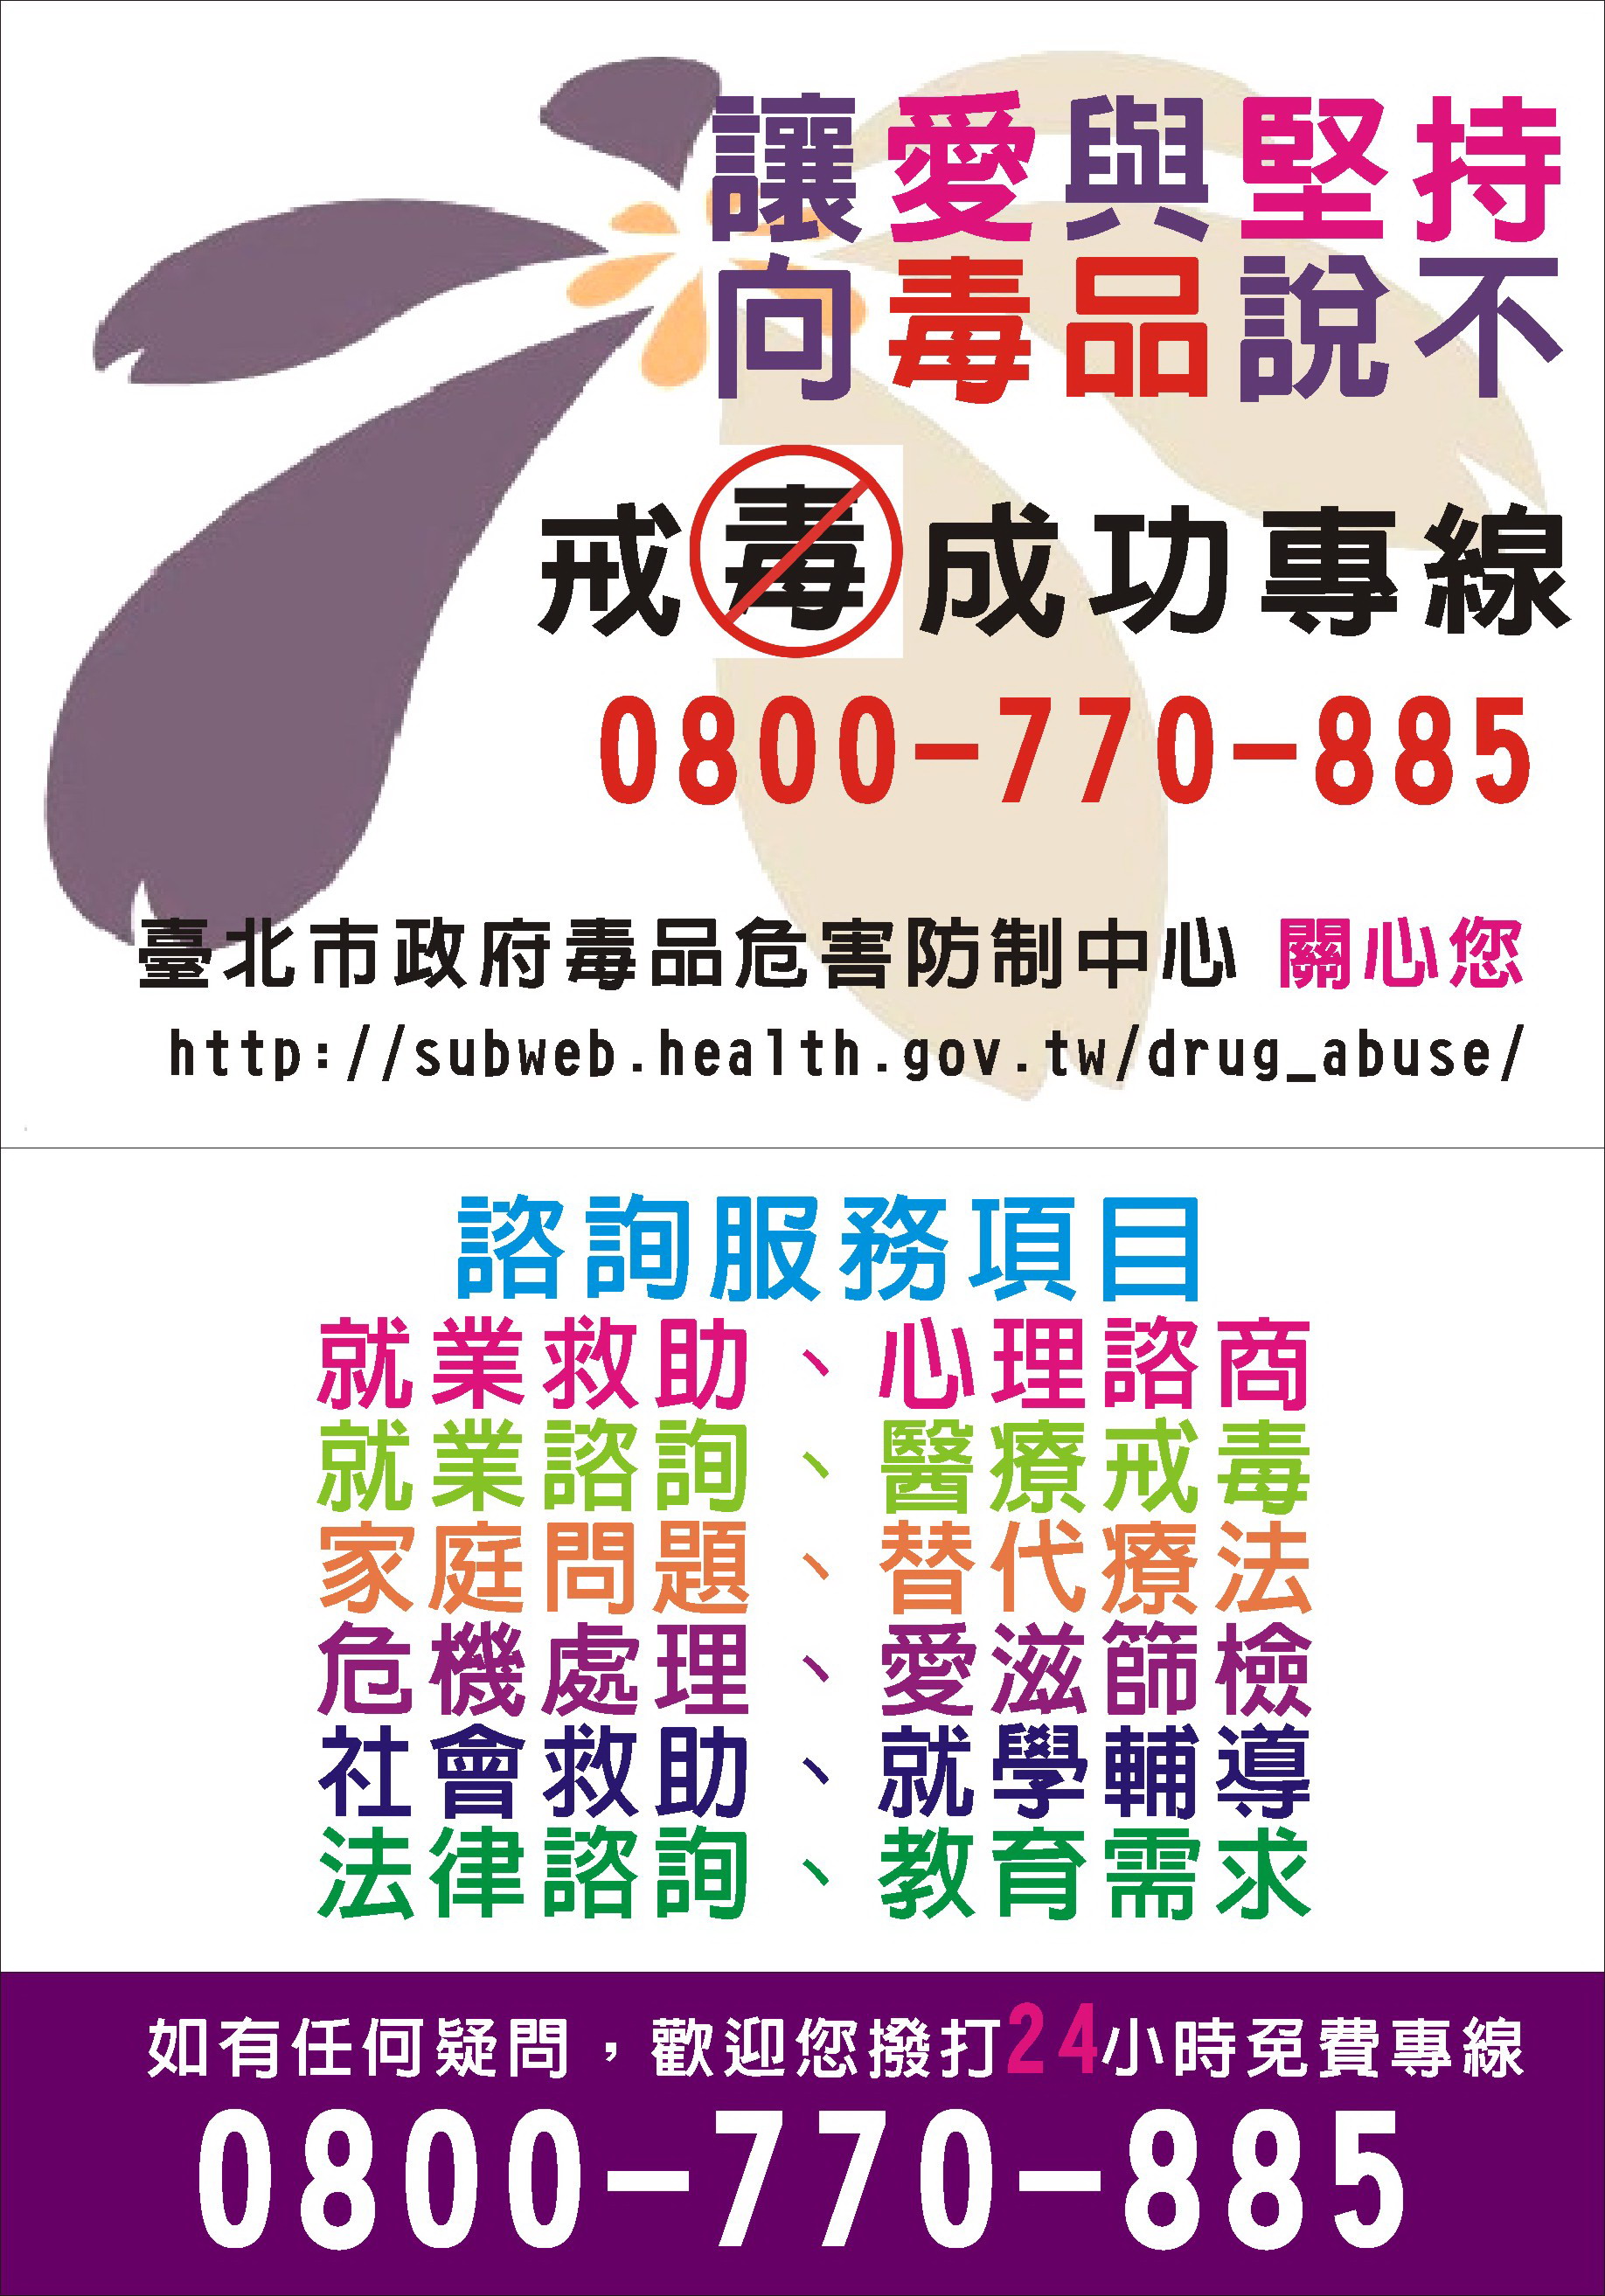 taipei city drug abuse prevention center hotline service 0800-770-885